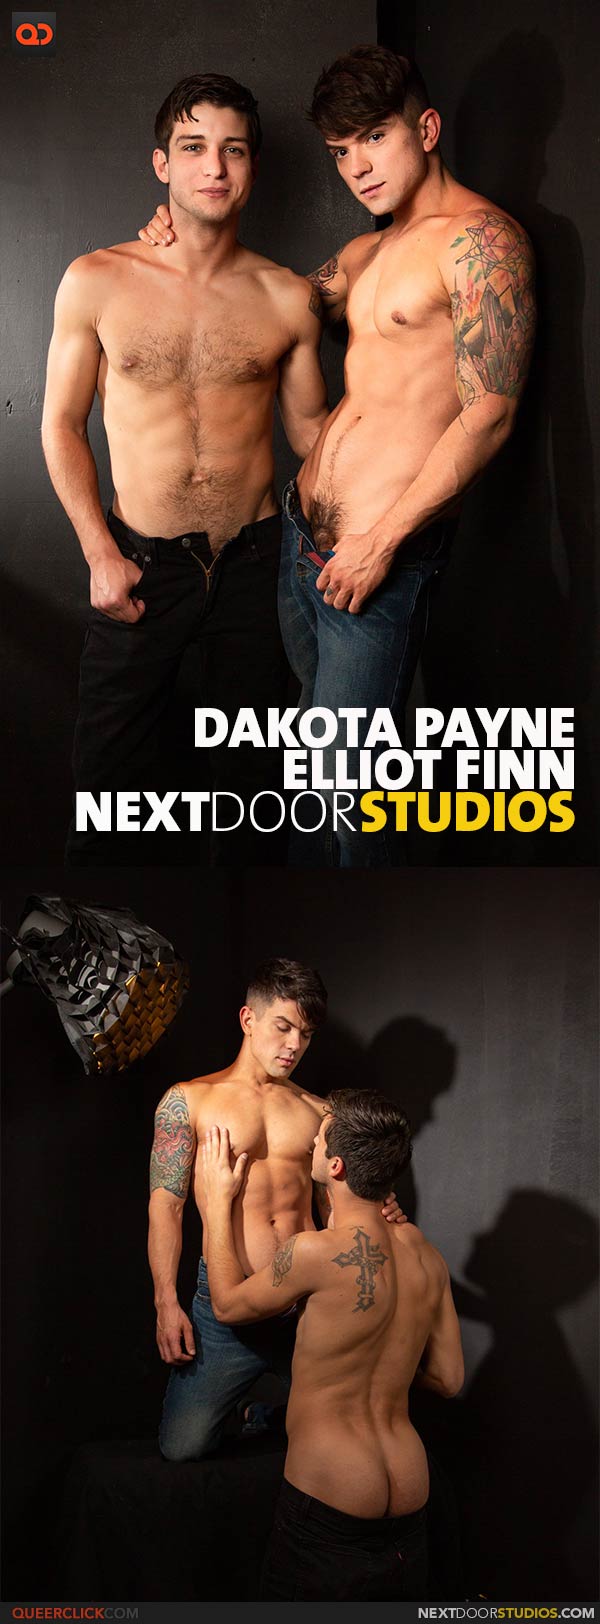 NextDoorStudios: Elliot Finn and Dakota Payne